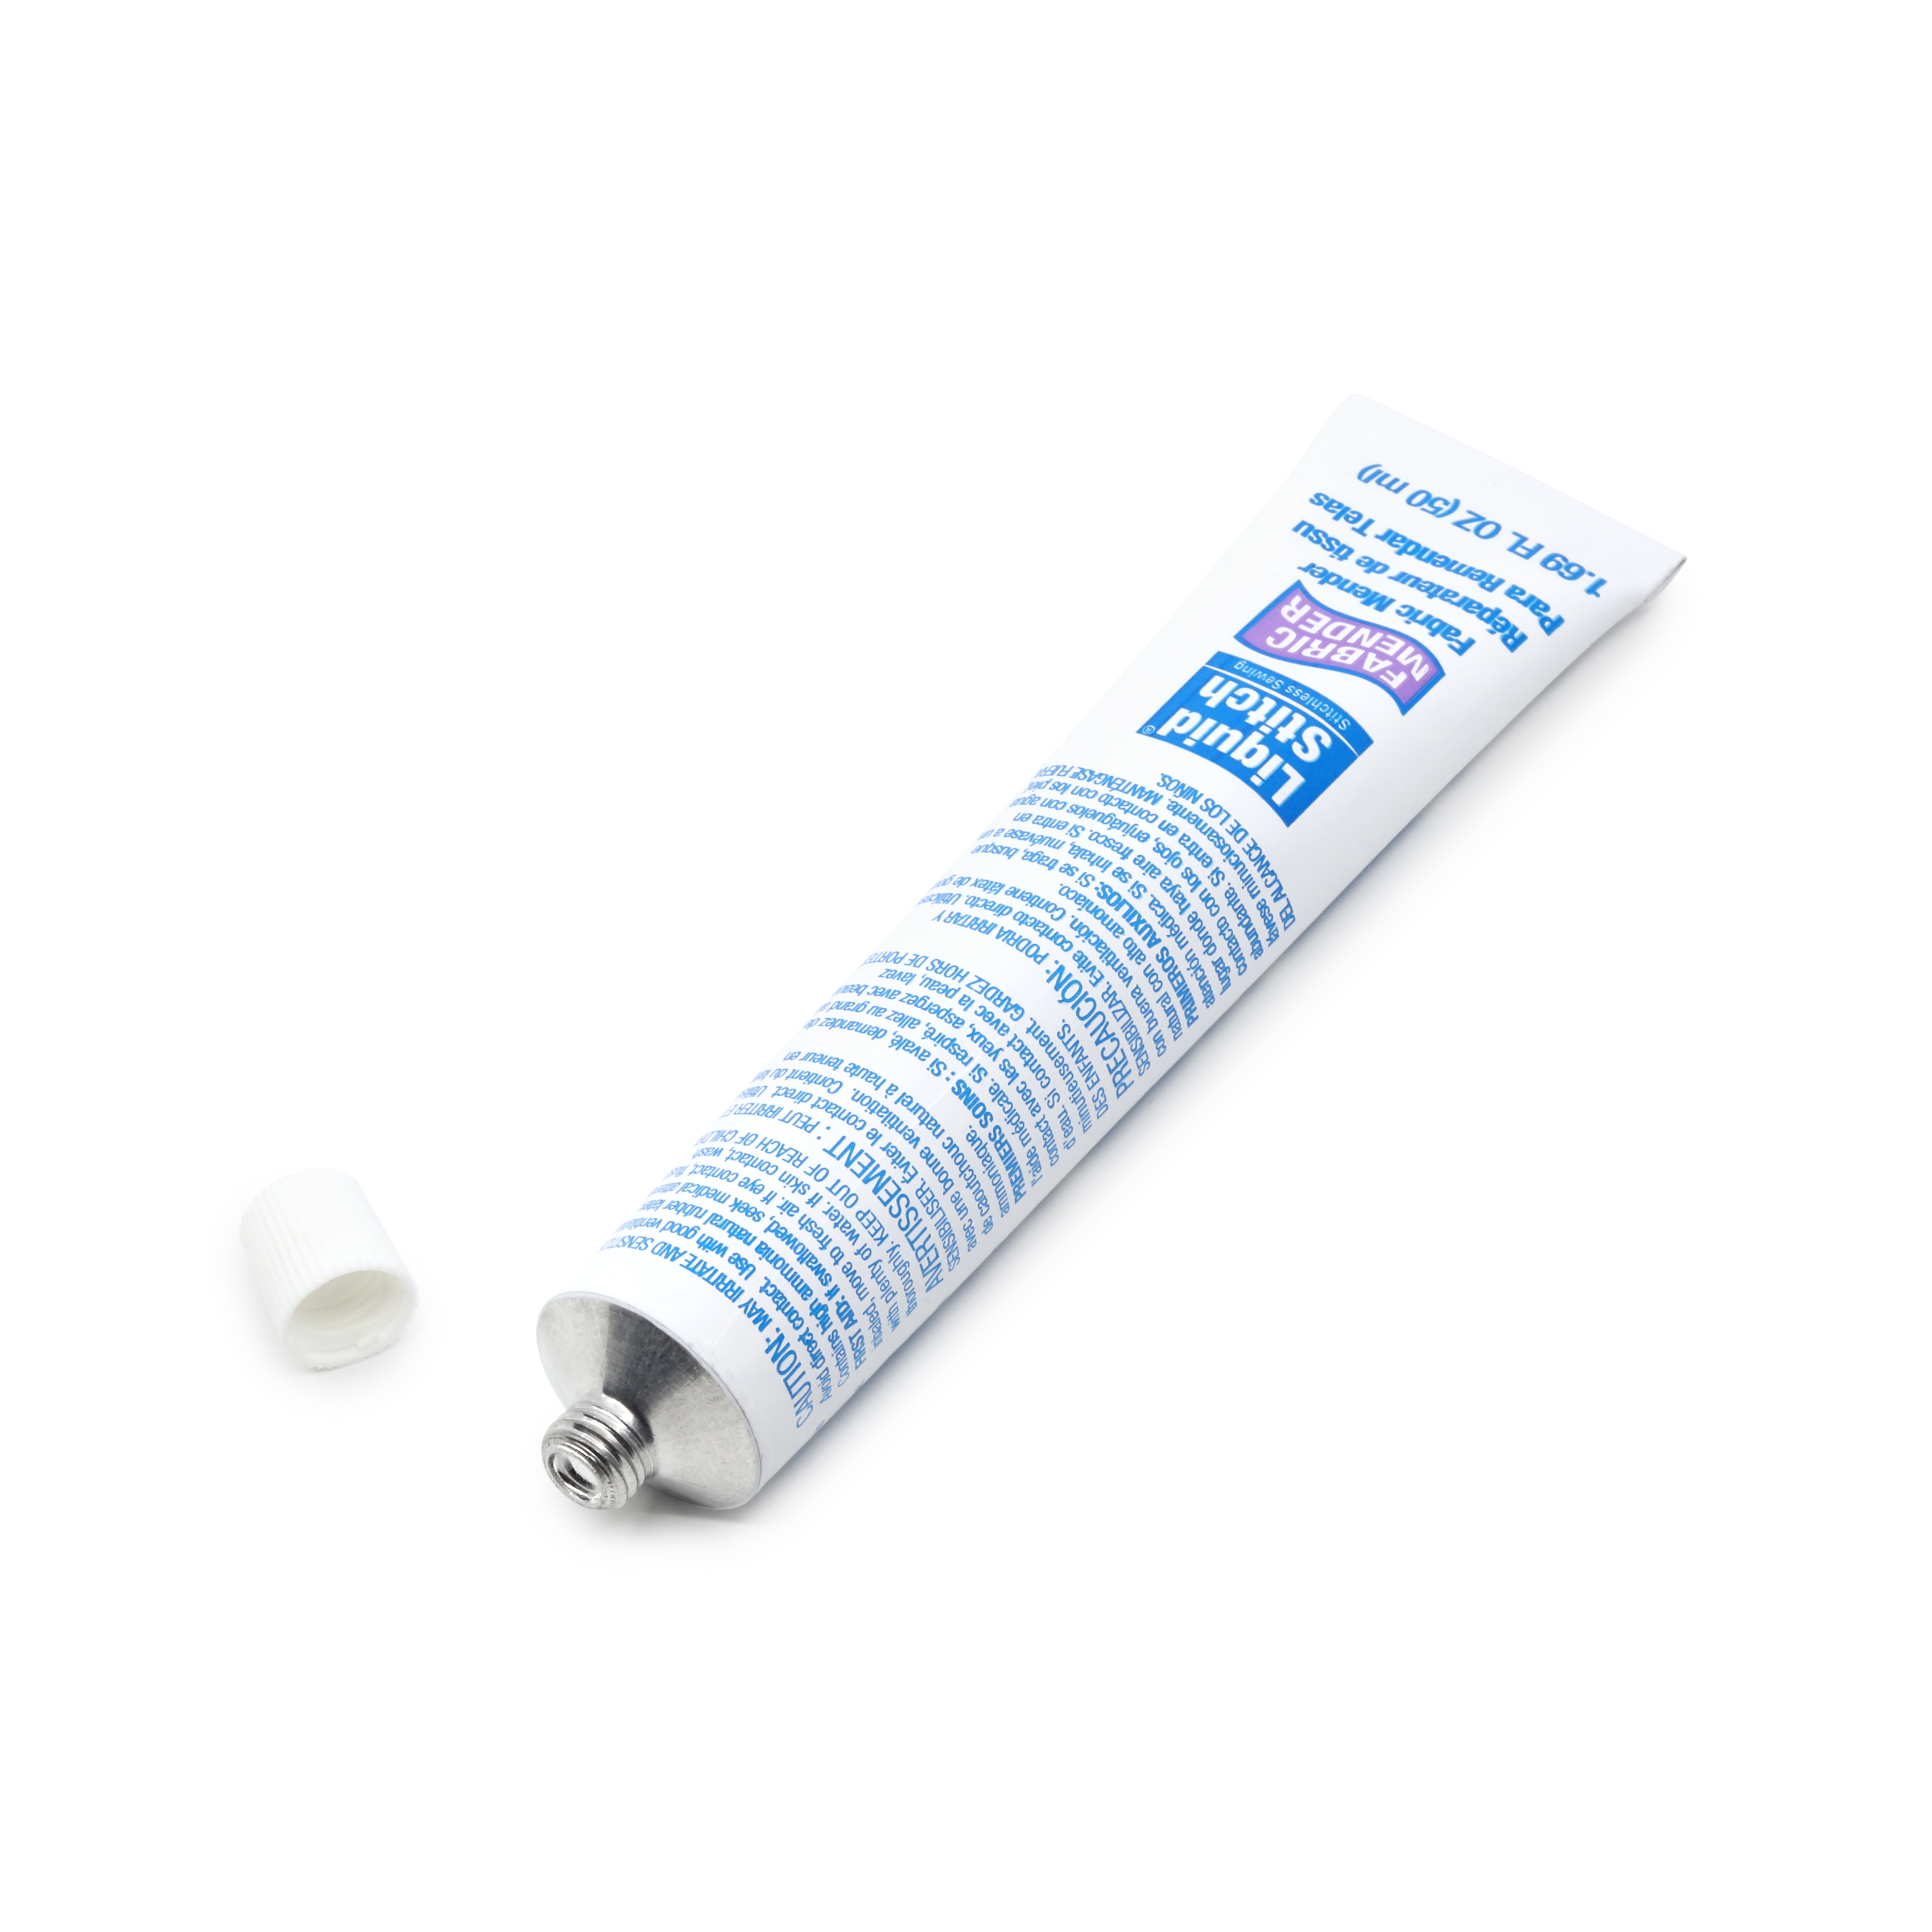 Dritz Liquid Stitch Fabric Mender, Fabric Adhesive, 1.69 Fluid Ounce